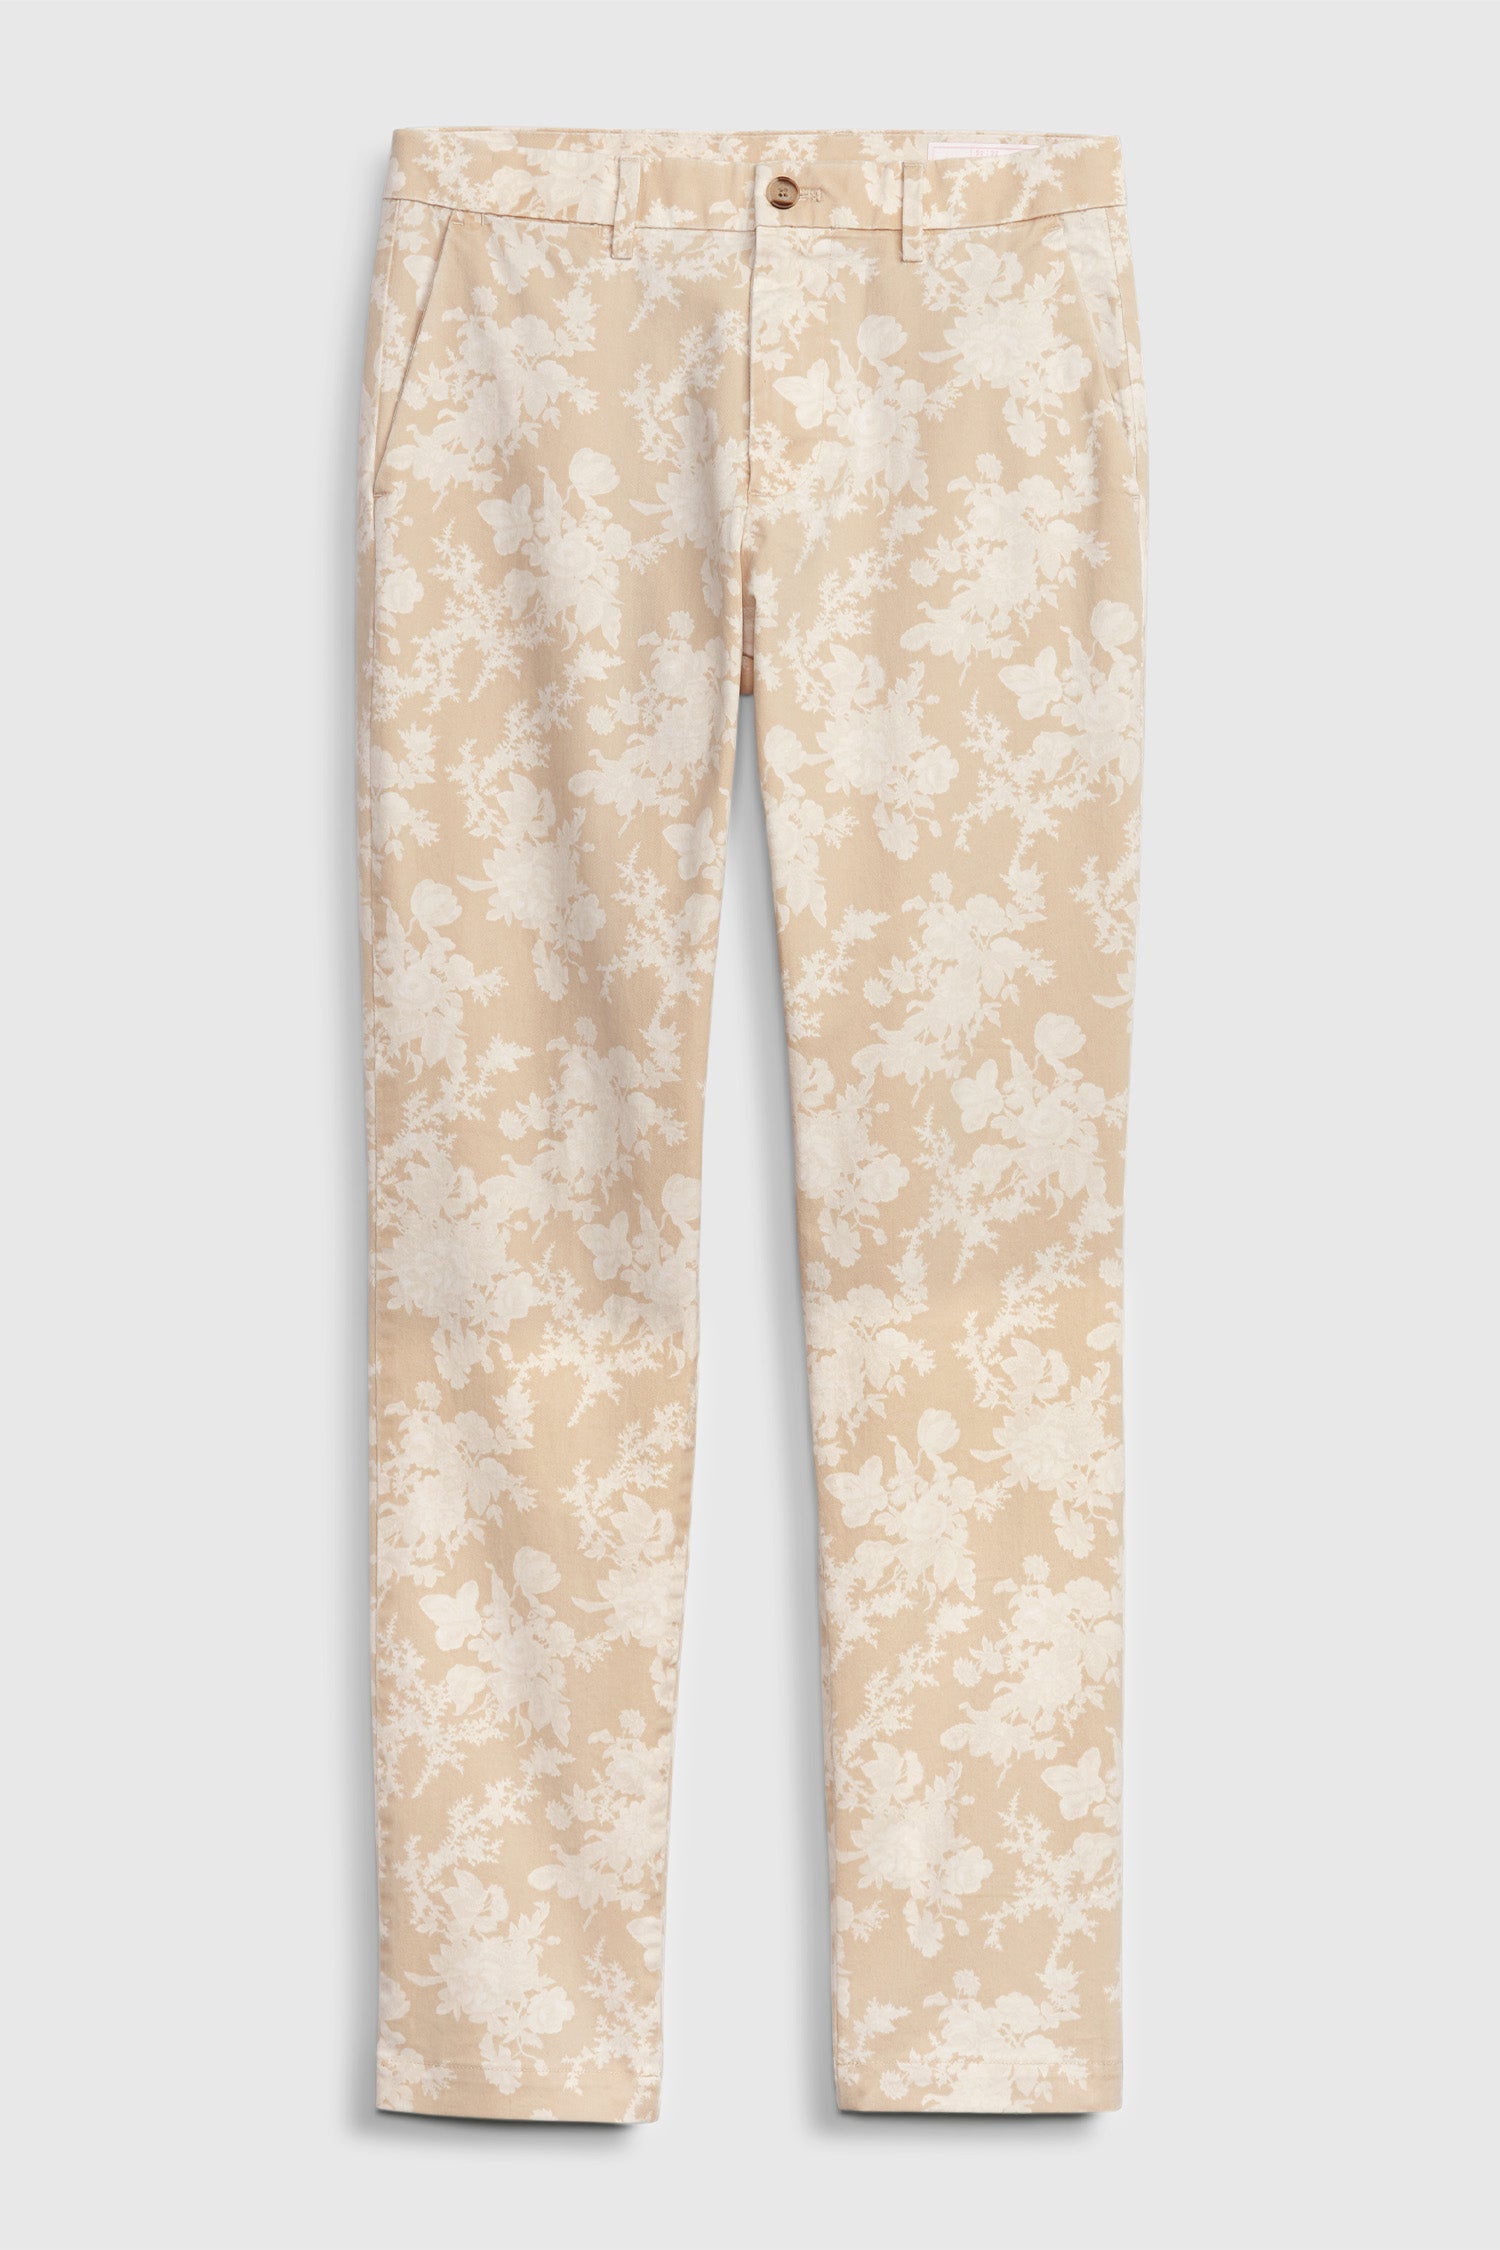 Men's beige floral khakis with front pockets